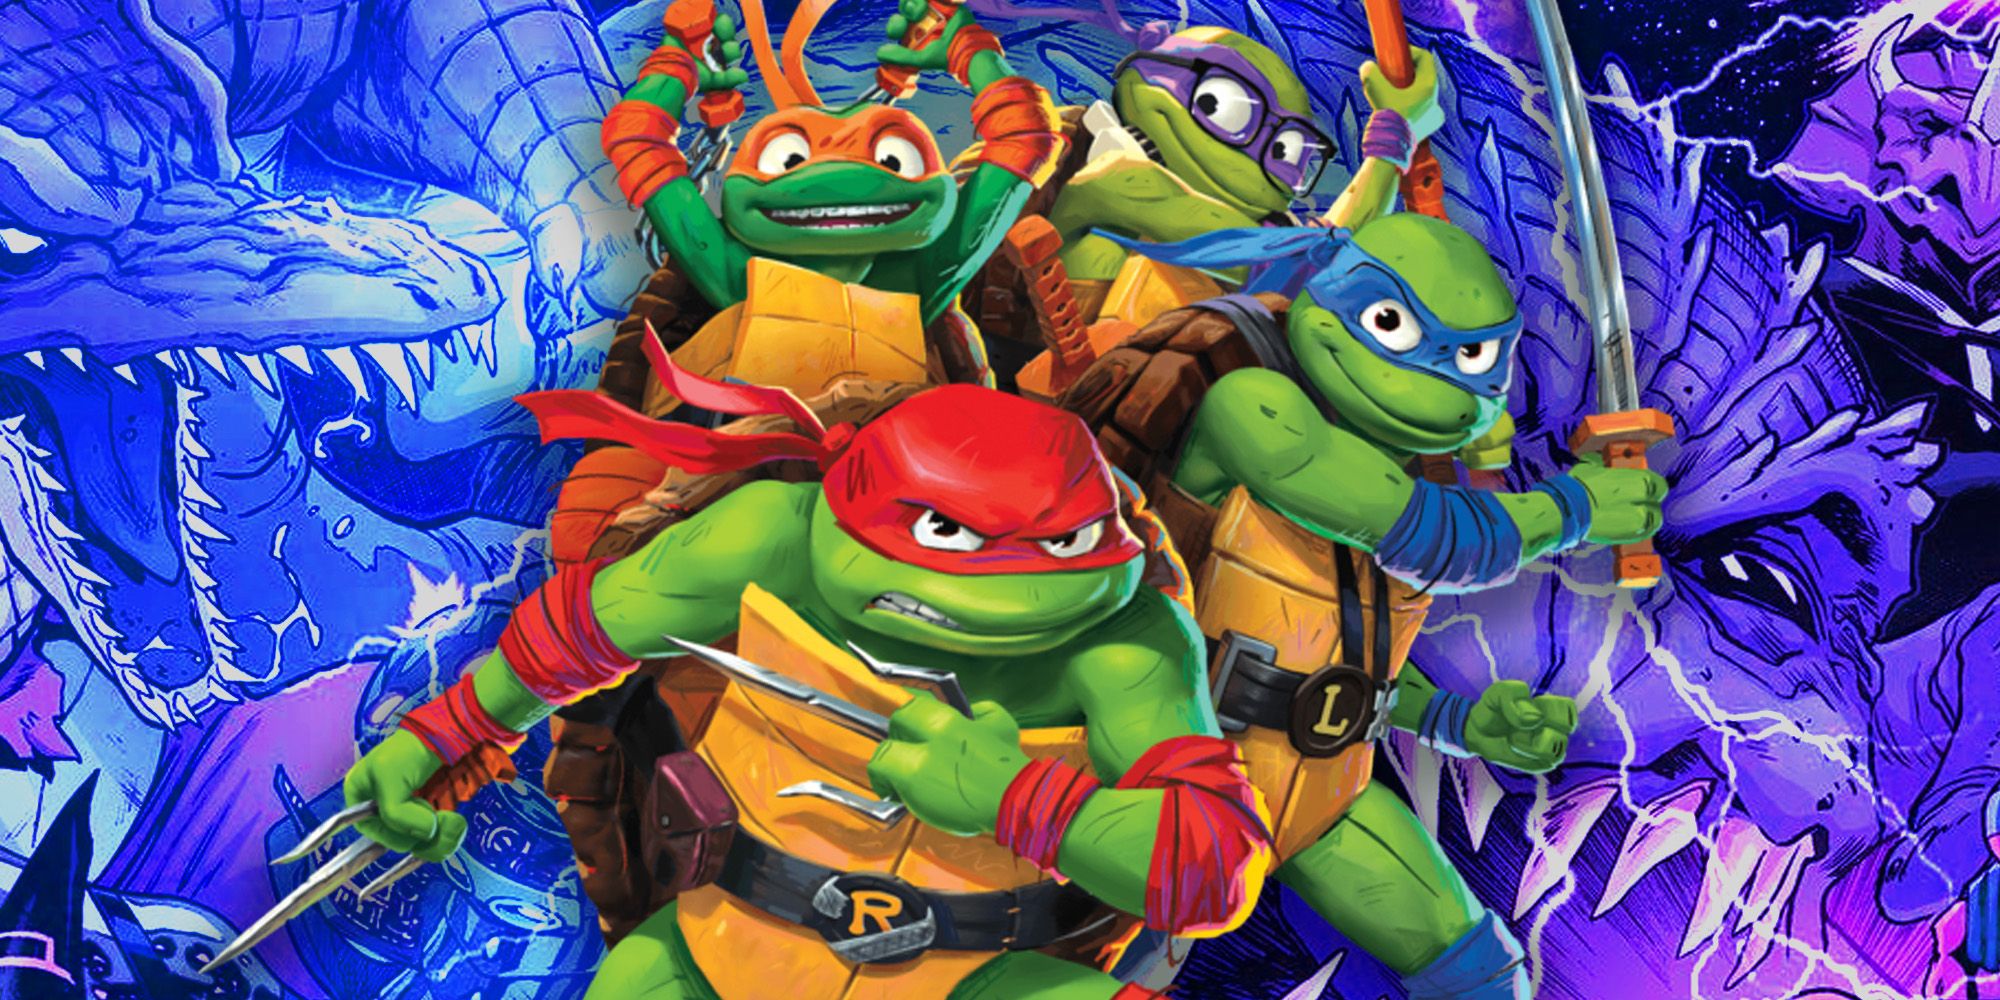 Teenage Mutant Ninja Turtles: Mutant Mayhem Leonardo, Raphael, Donatello, and Michelangelo surrounded by villains